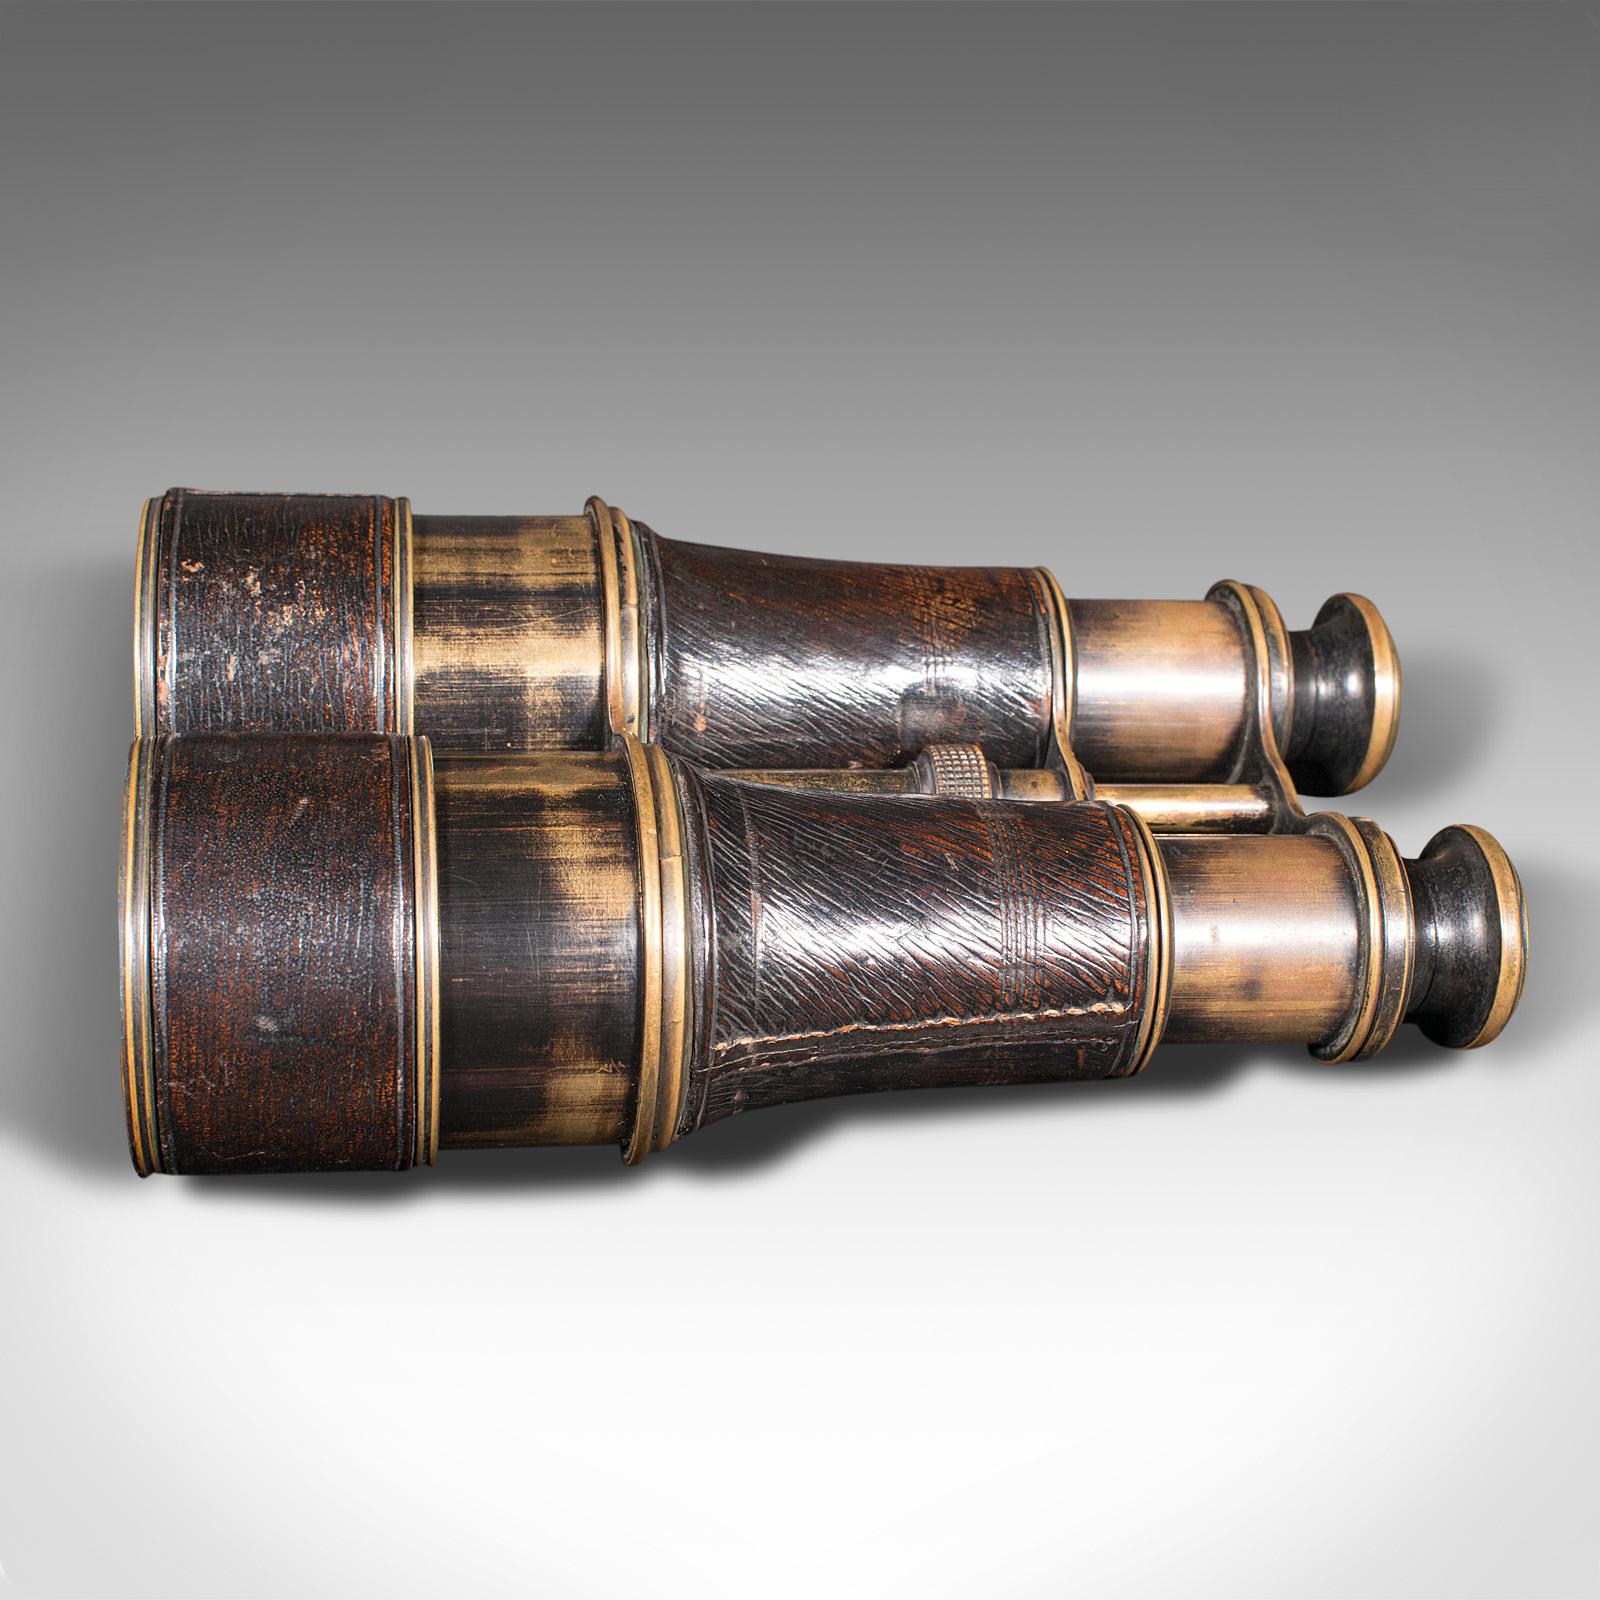 20th Century Pair of Antique Binoculars, English, Brass, Leather, Optical Instrument, c.1920